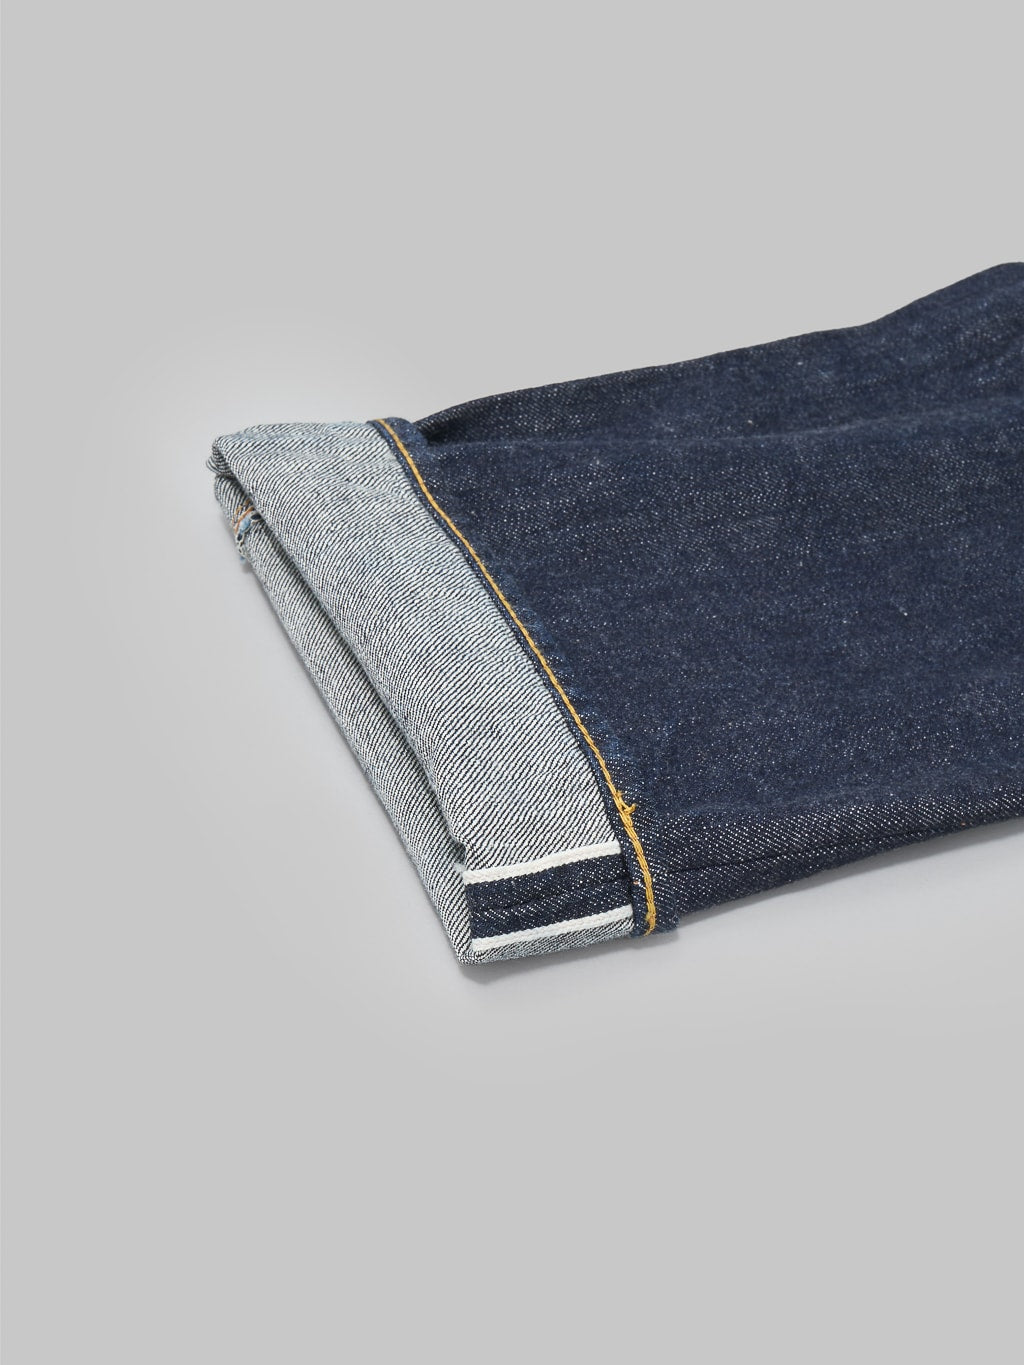 fullcount 1103 clean straight selvedge denim jeans selvedge closeup